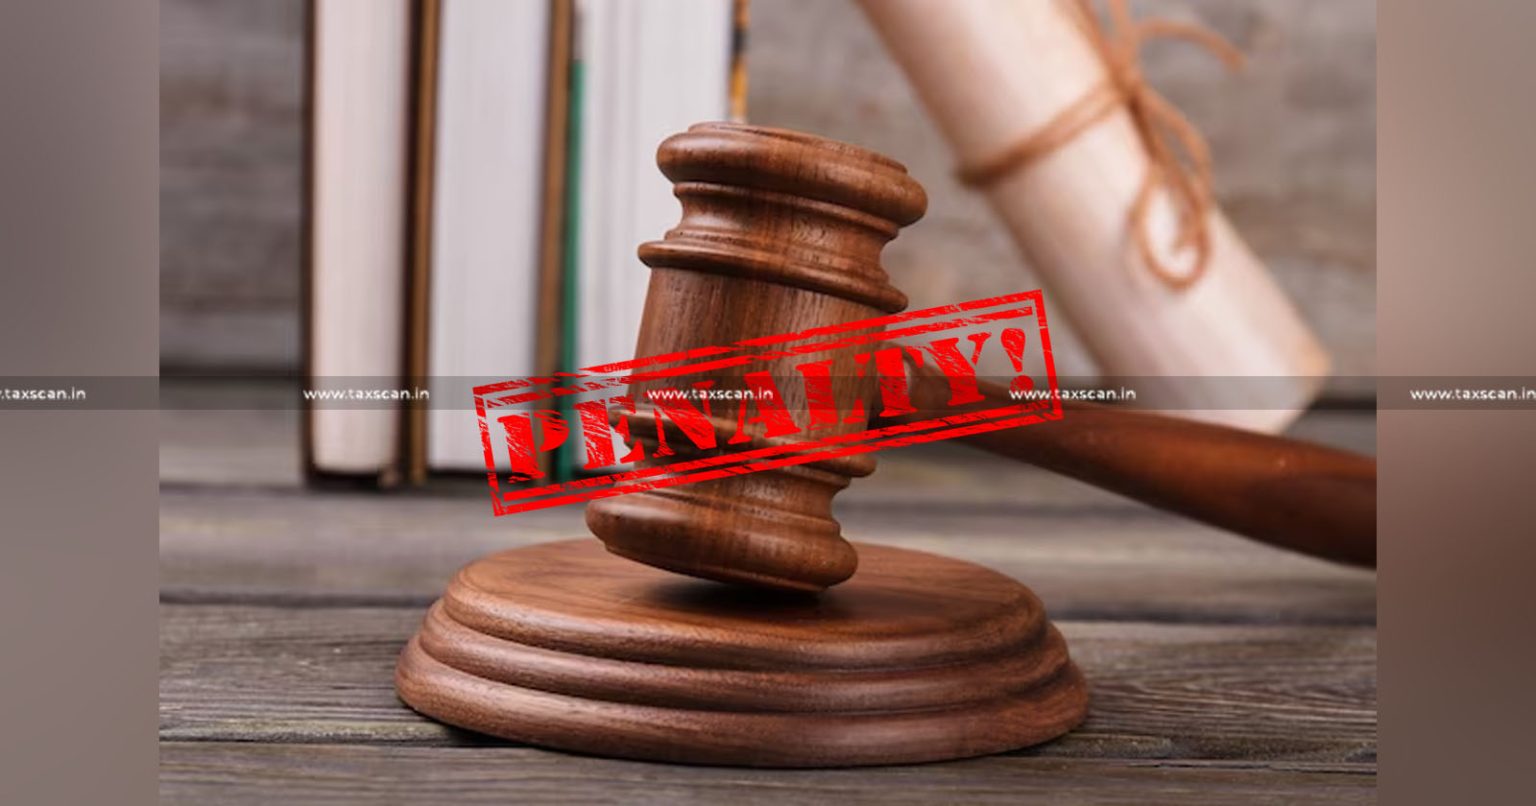 ITAT Penalty us 271(1)(c) - Unfair Representation During - Liquidation Process - TAXSCAN